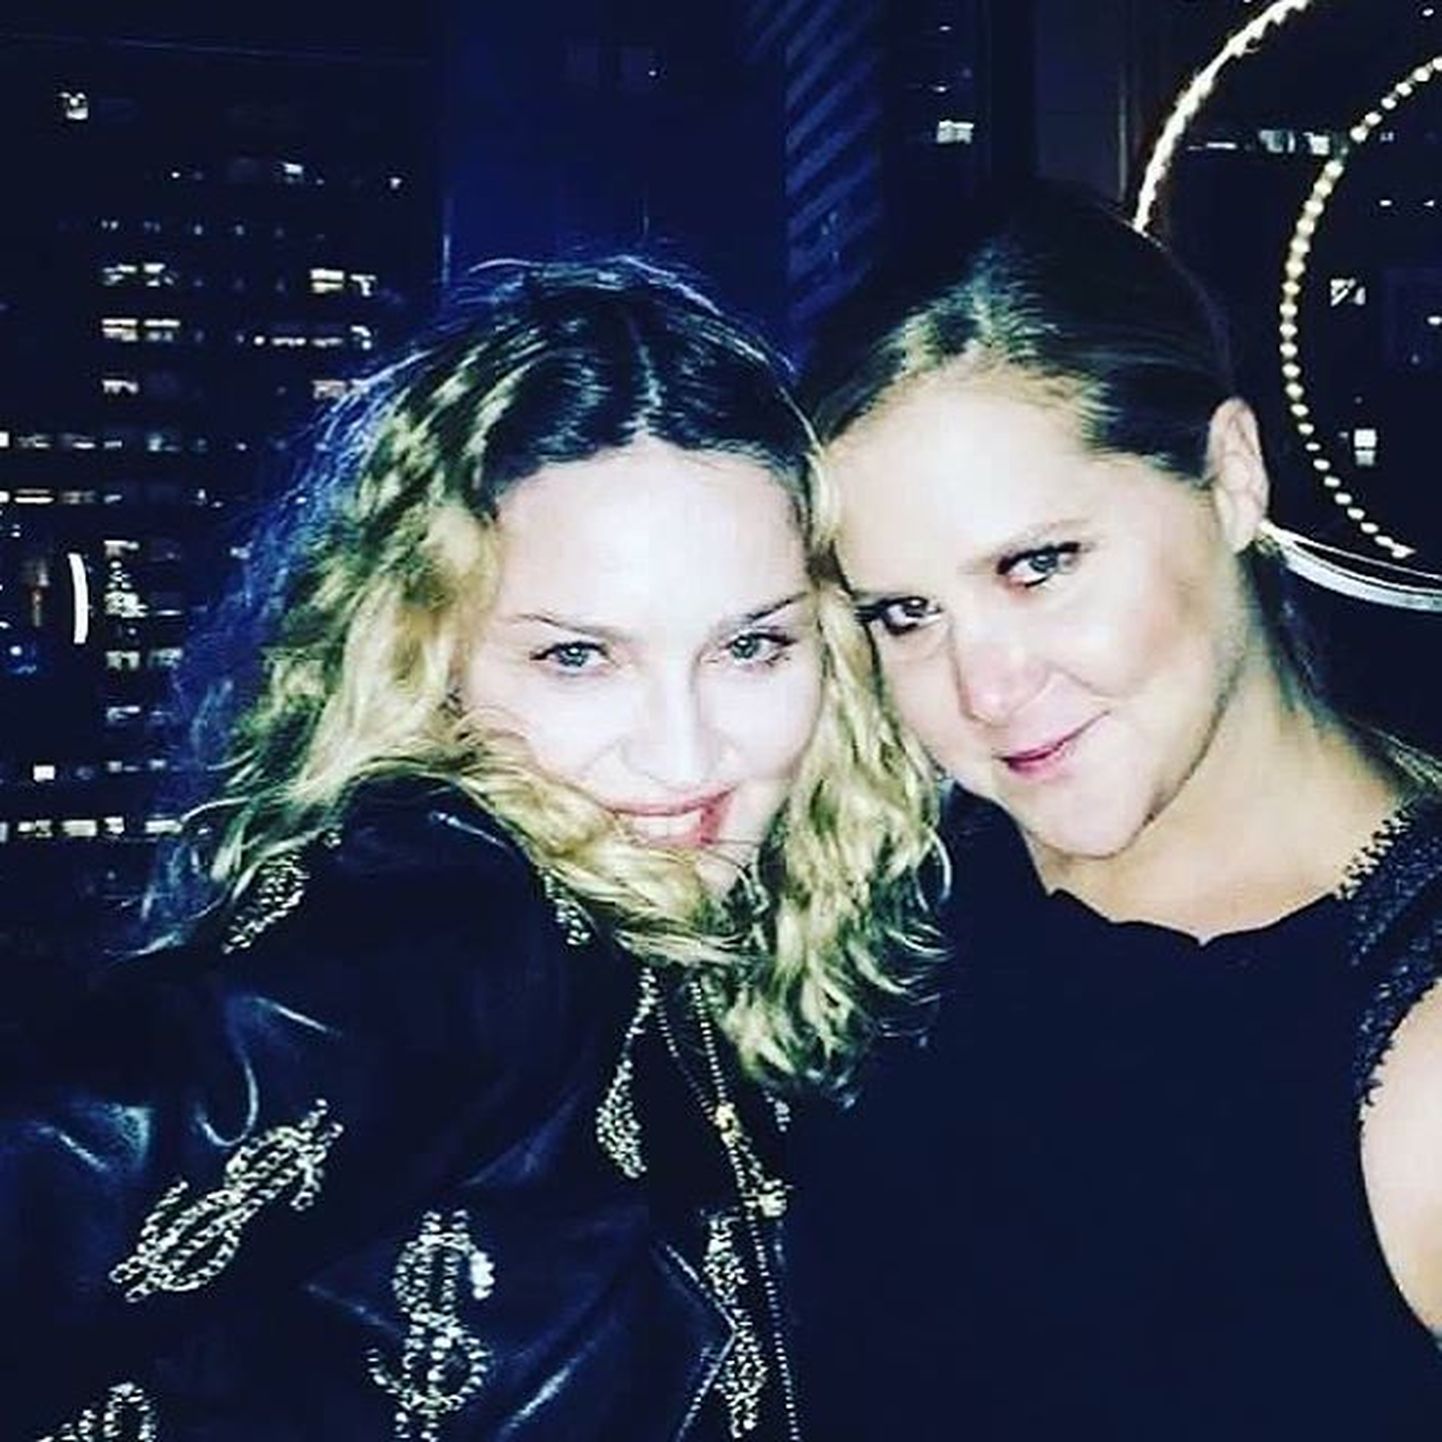 Madonna ja Amy Schumer